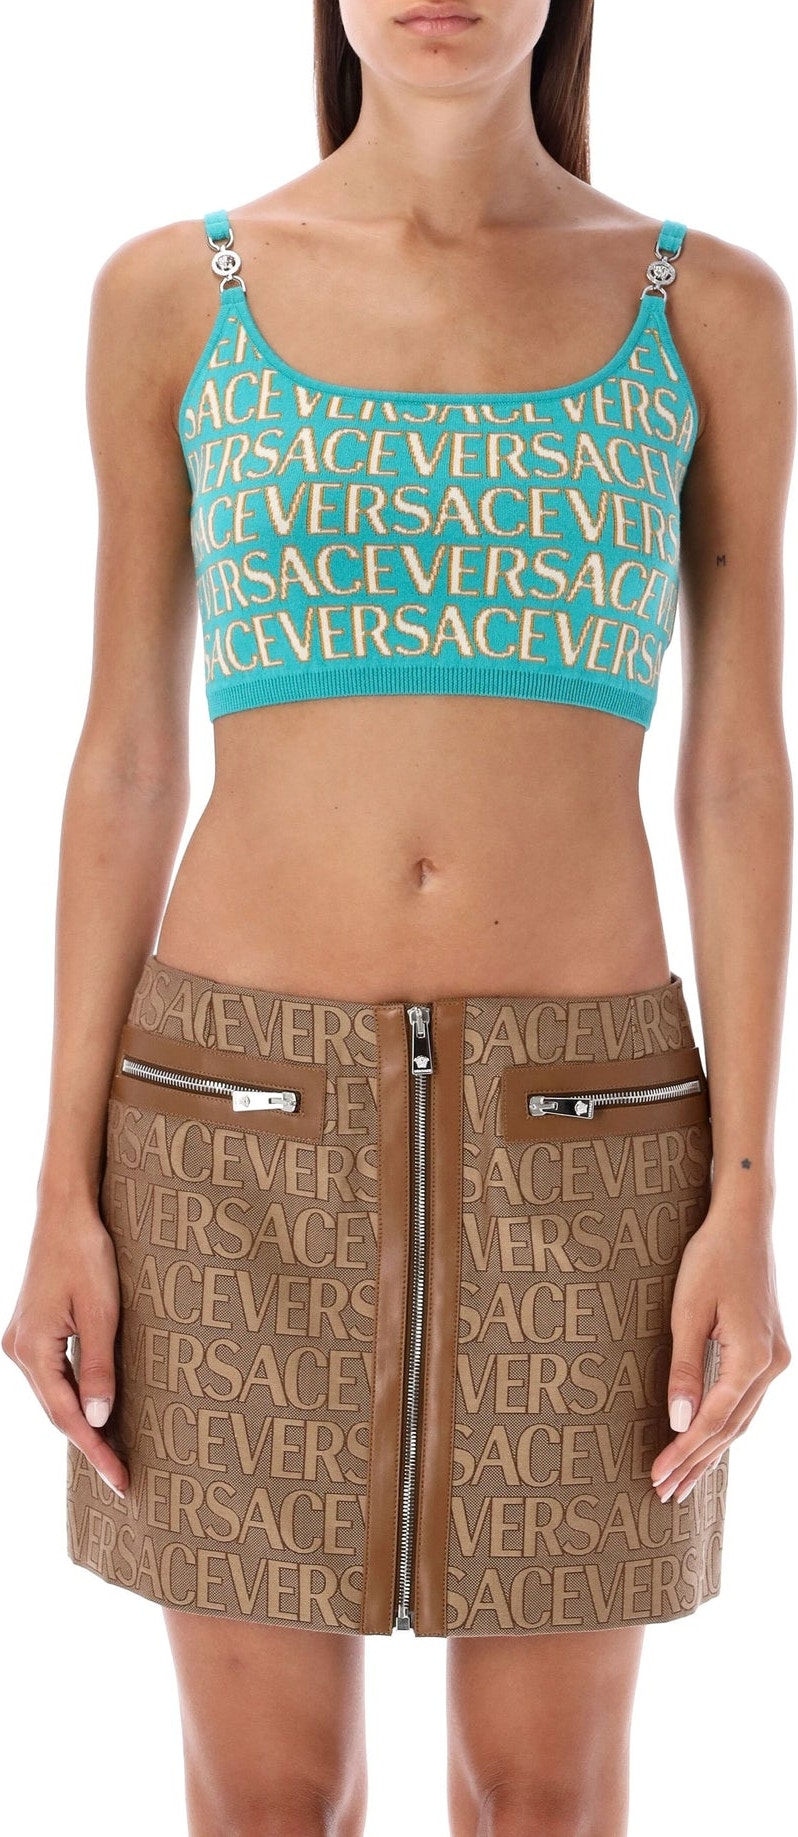 Versace Versace Allover Knit Crop Top for Women